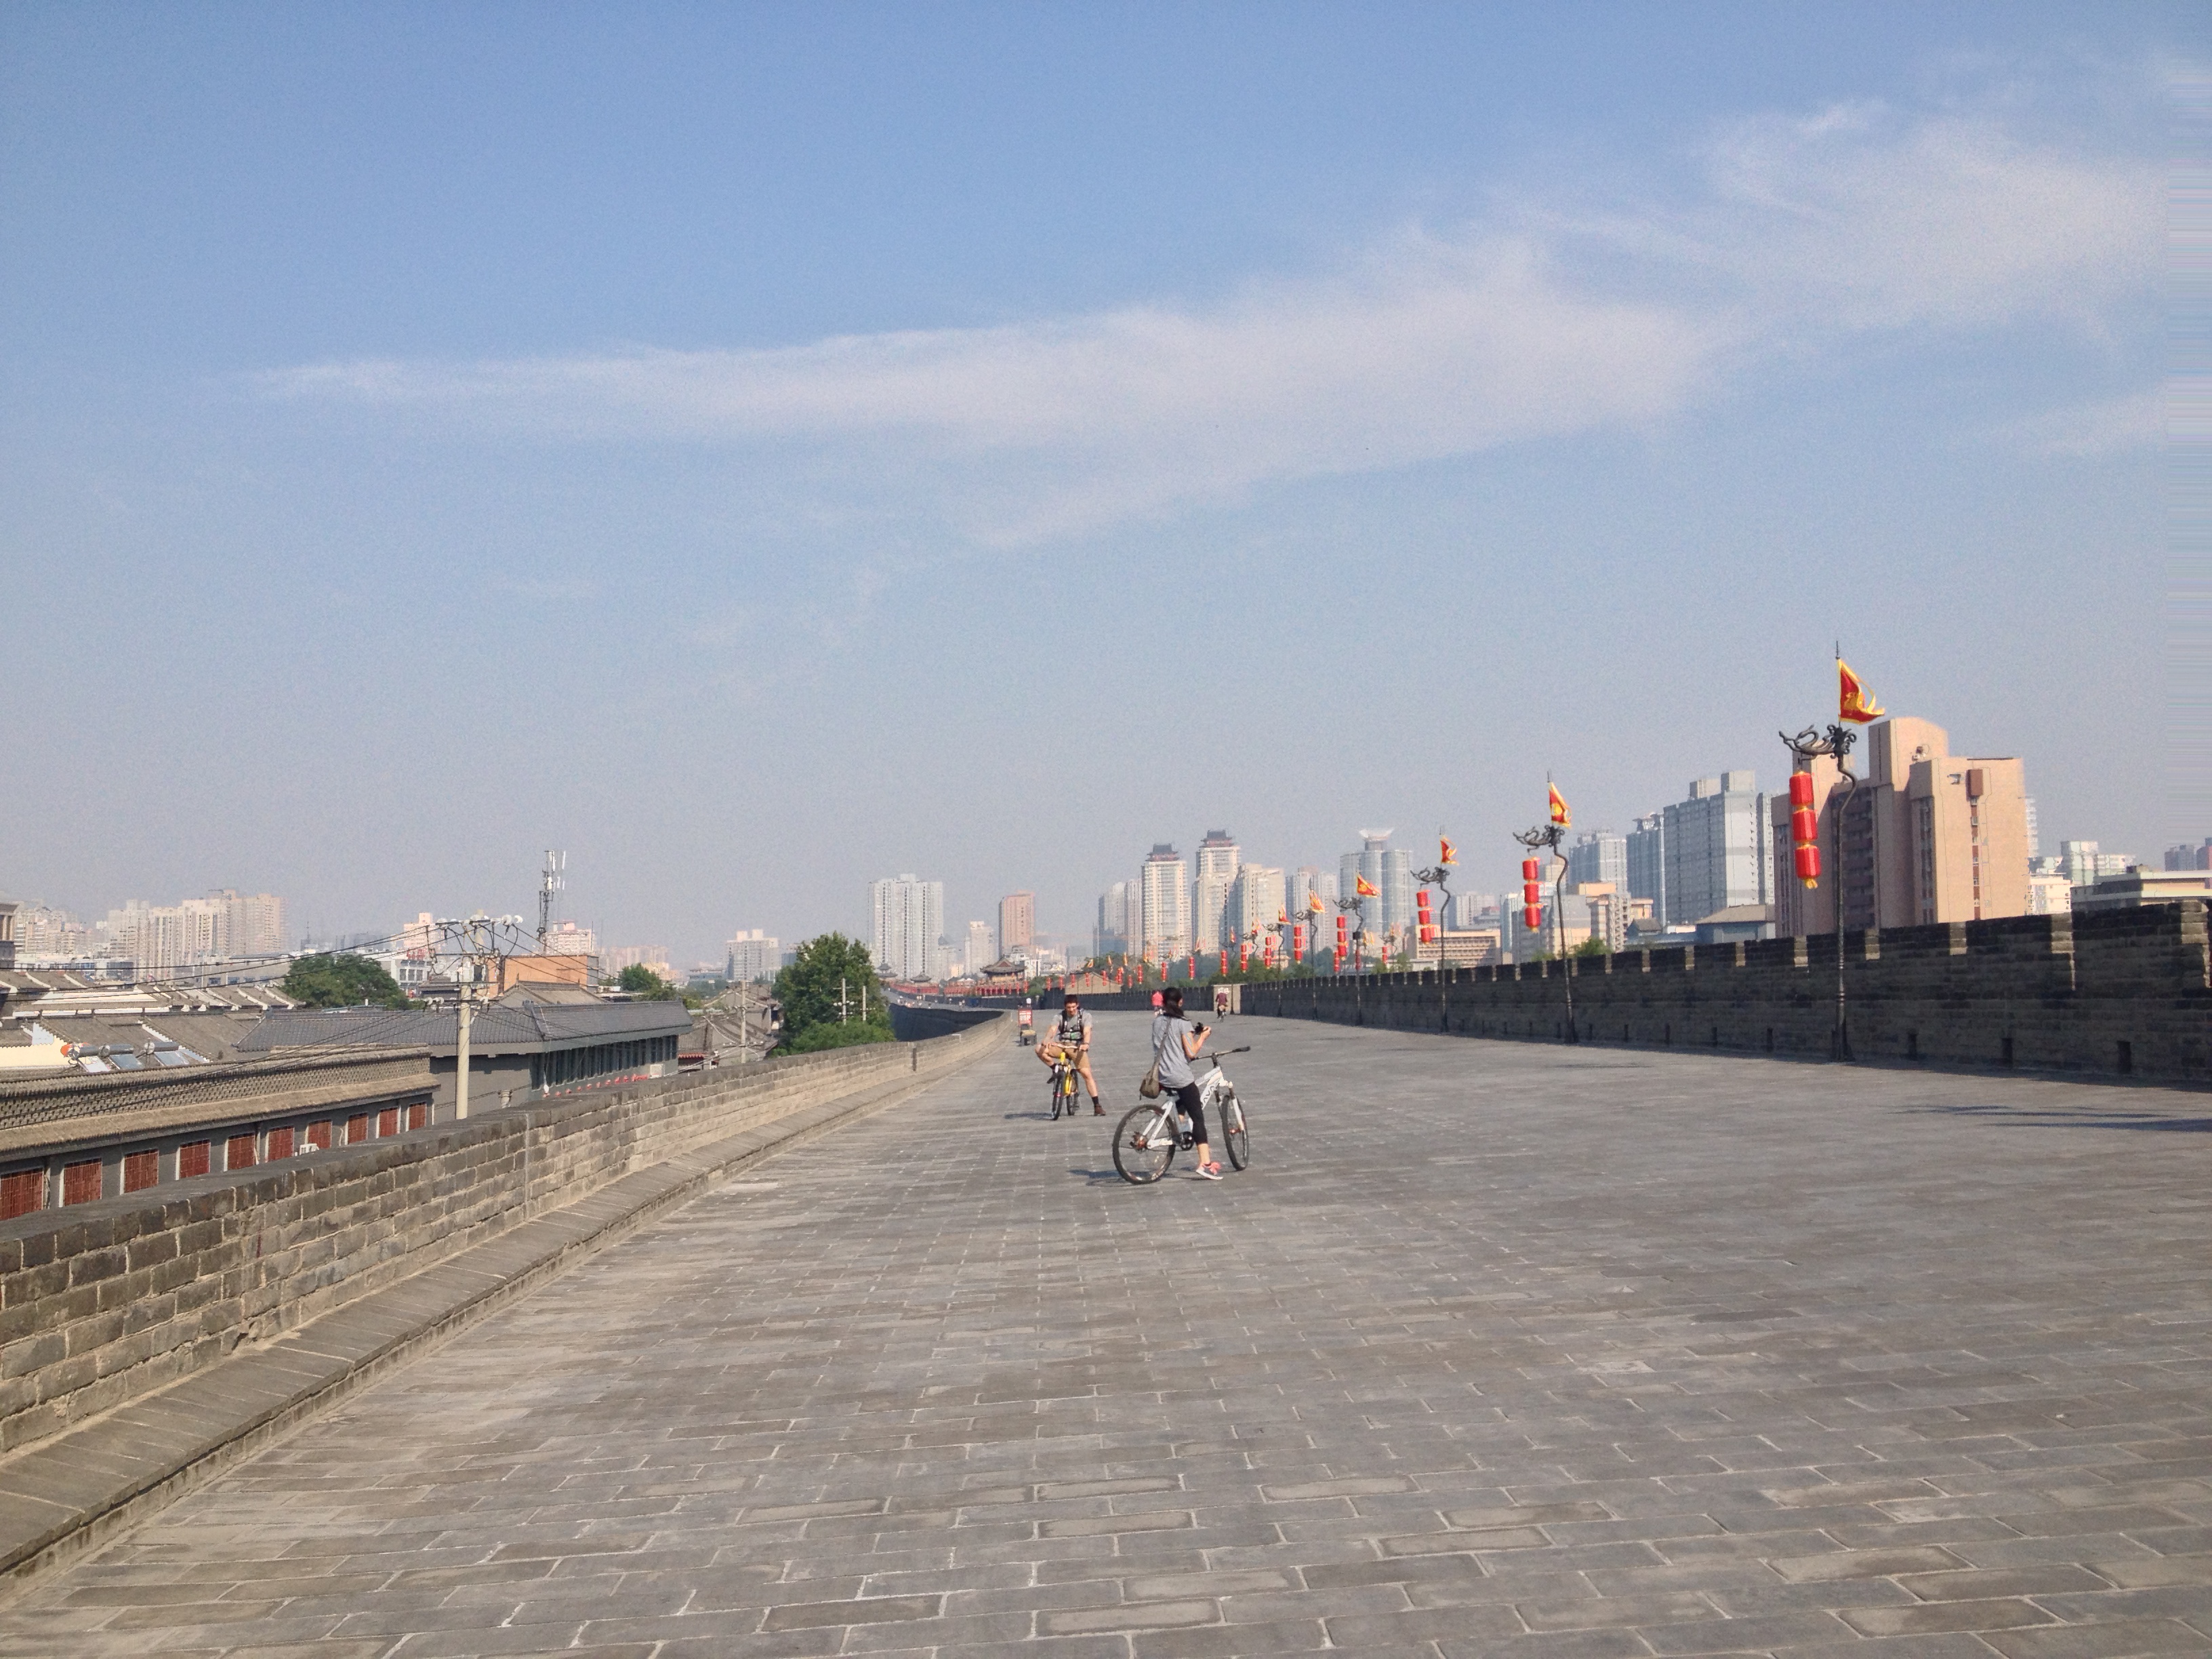 Riding bikes around the city wall